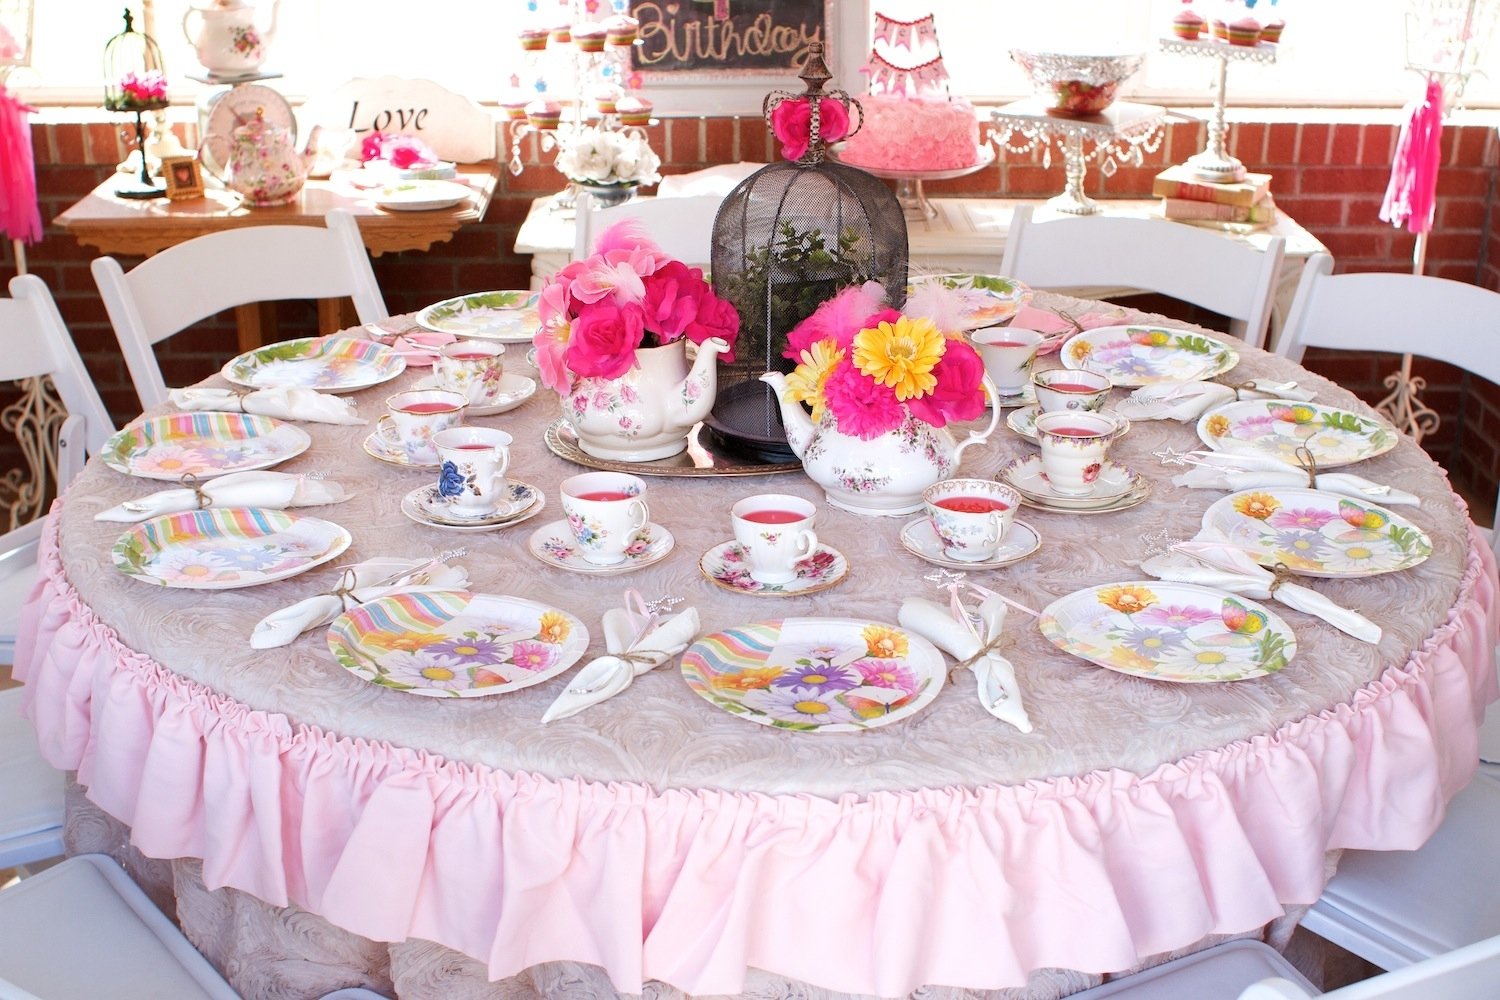 10 Fashionable Tea Party Birthday Party Ideas garden tea party classy clutter 1 2023